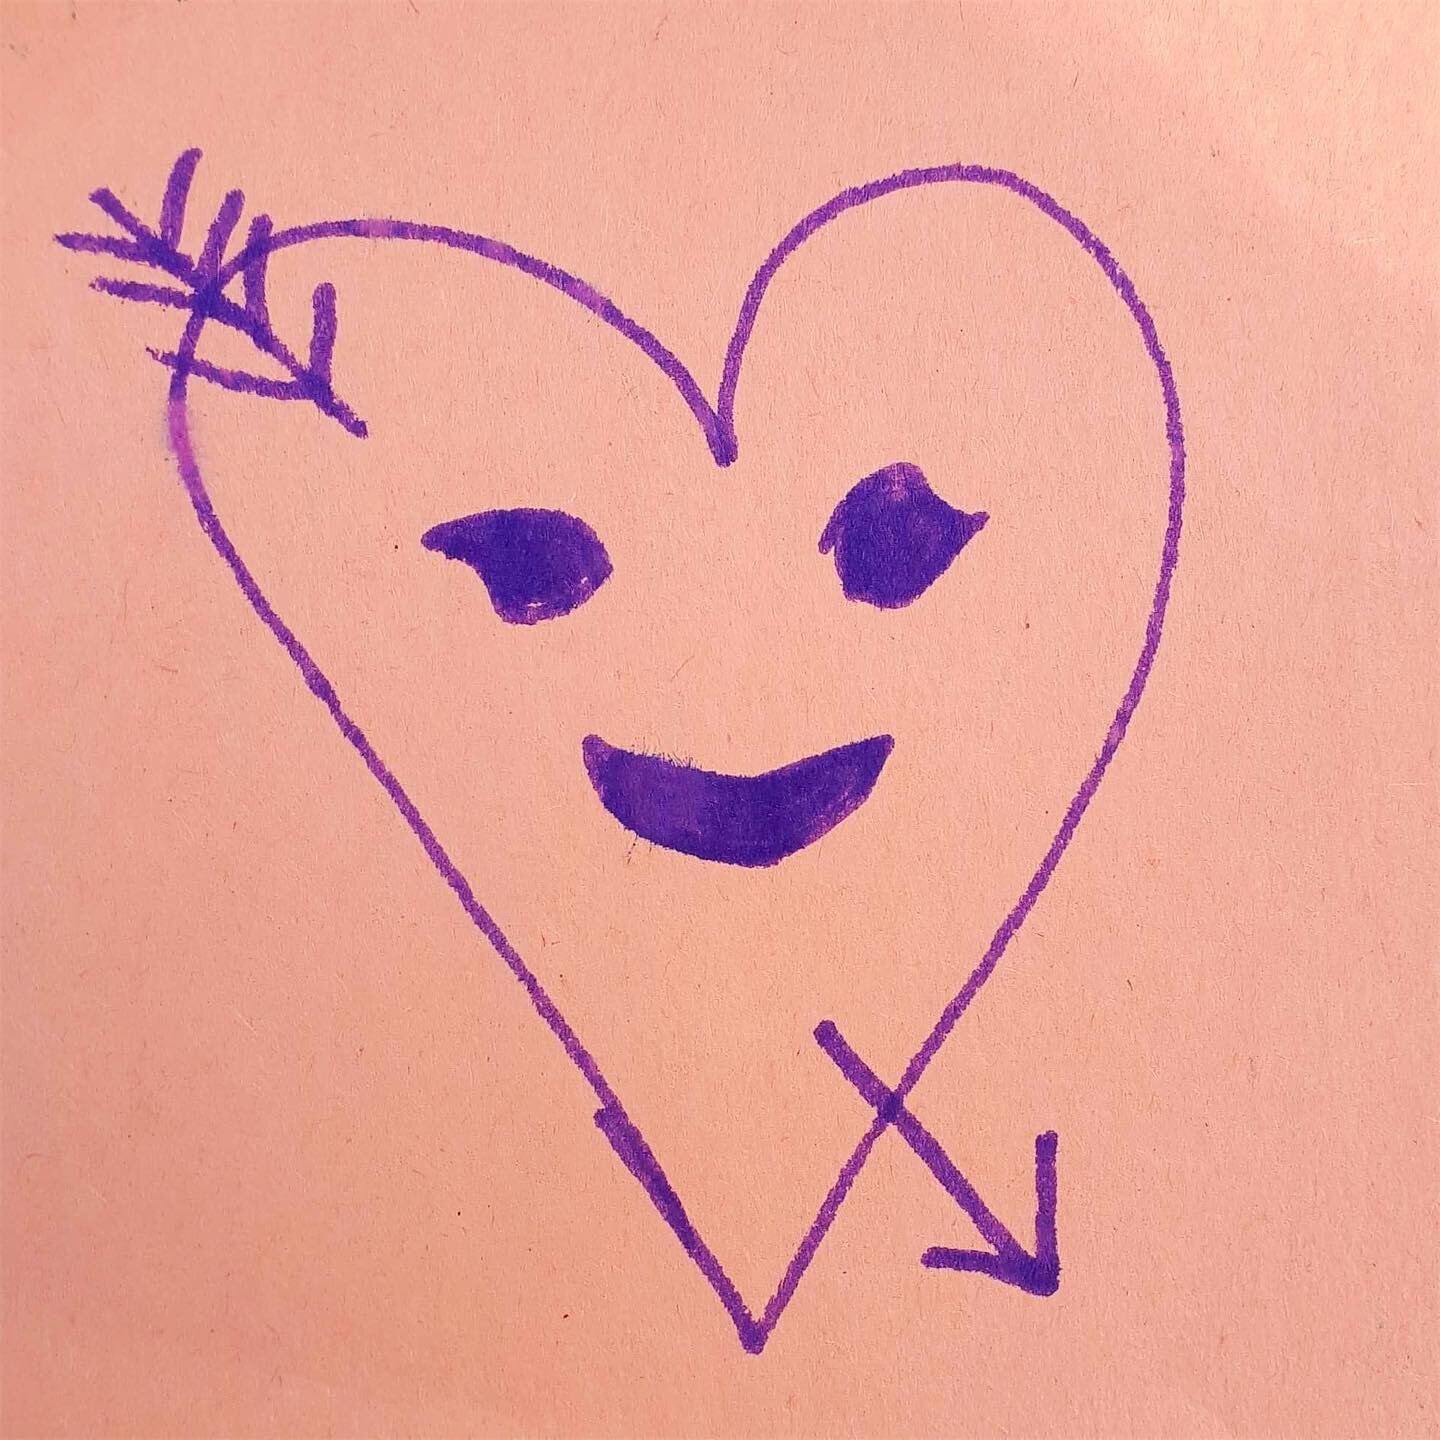 A little love at the ArkBench, thank you so much for sharing this sweet character 💜
.
.
.
#arkbench #communityart #community #lakecountry #okanaganlife #okanagan #foundart #artexchange #drawing #art #heart #love